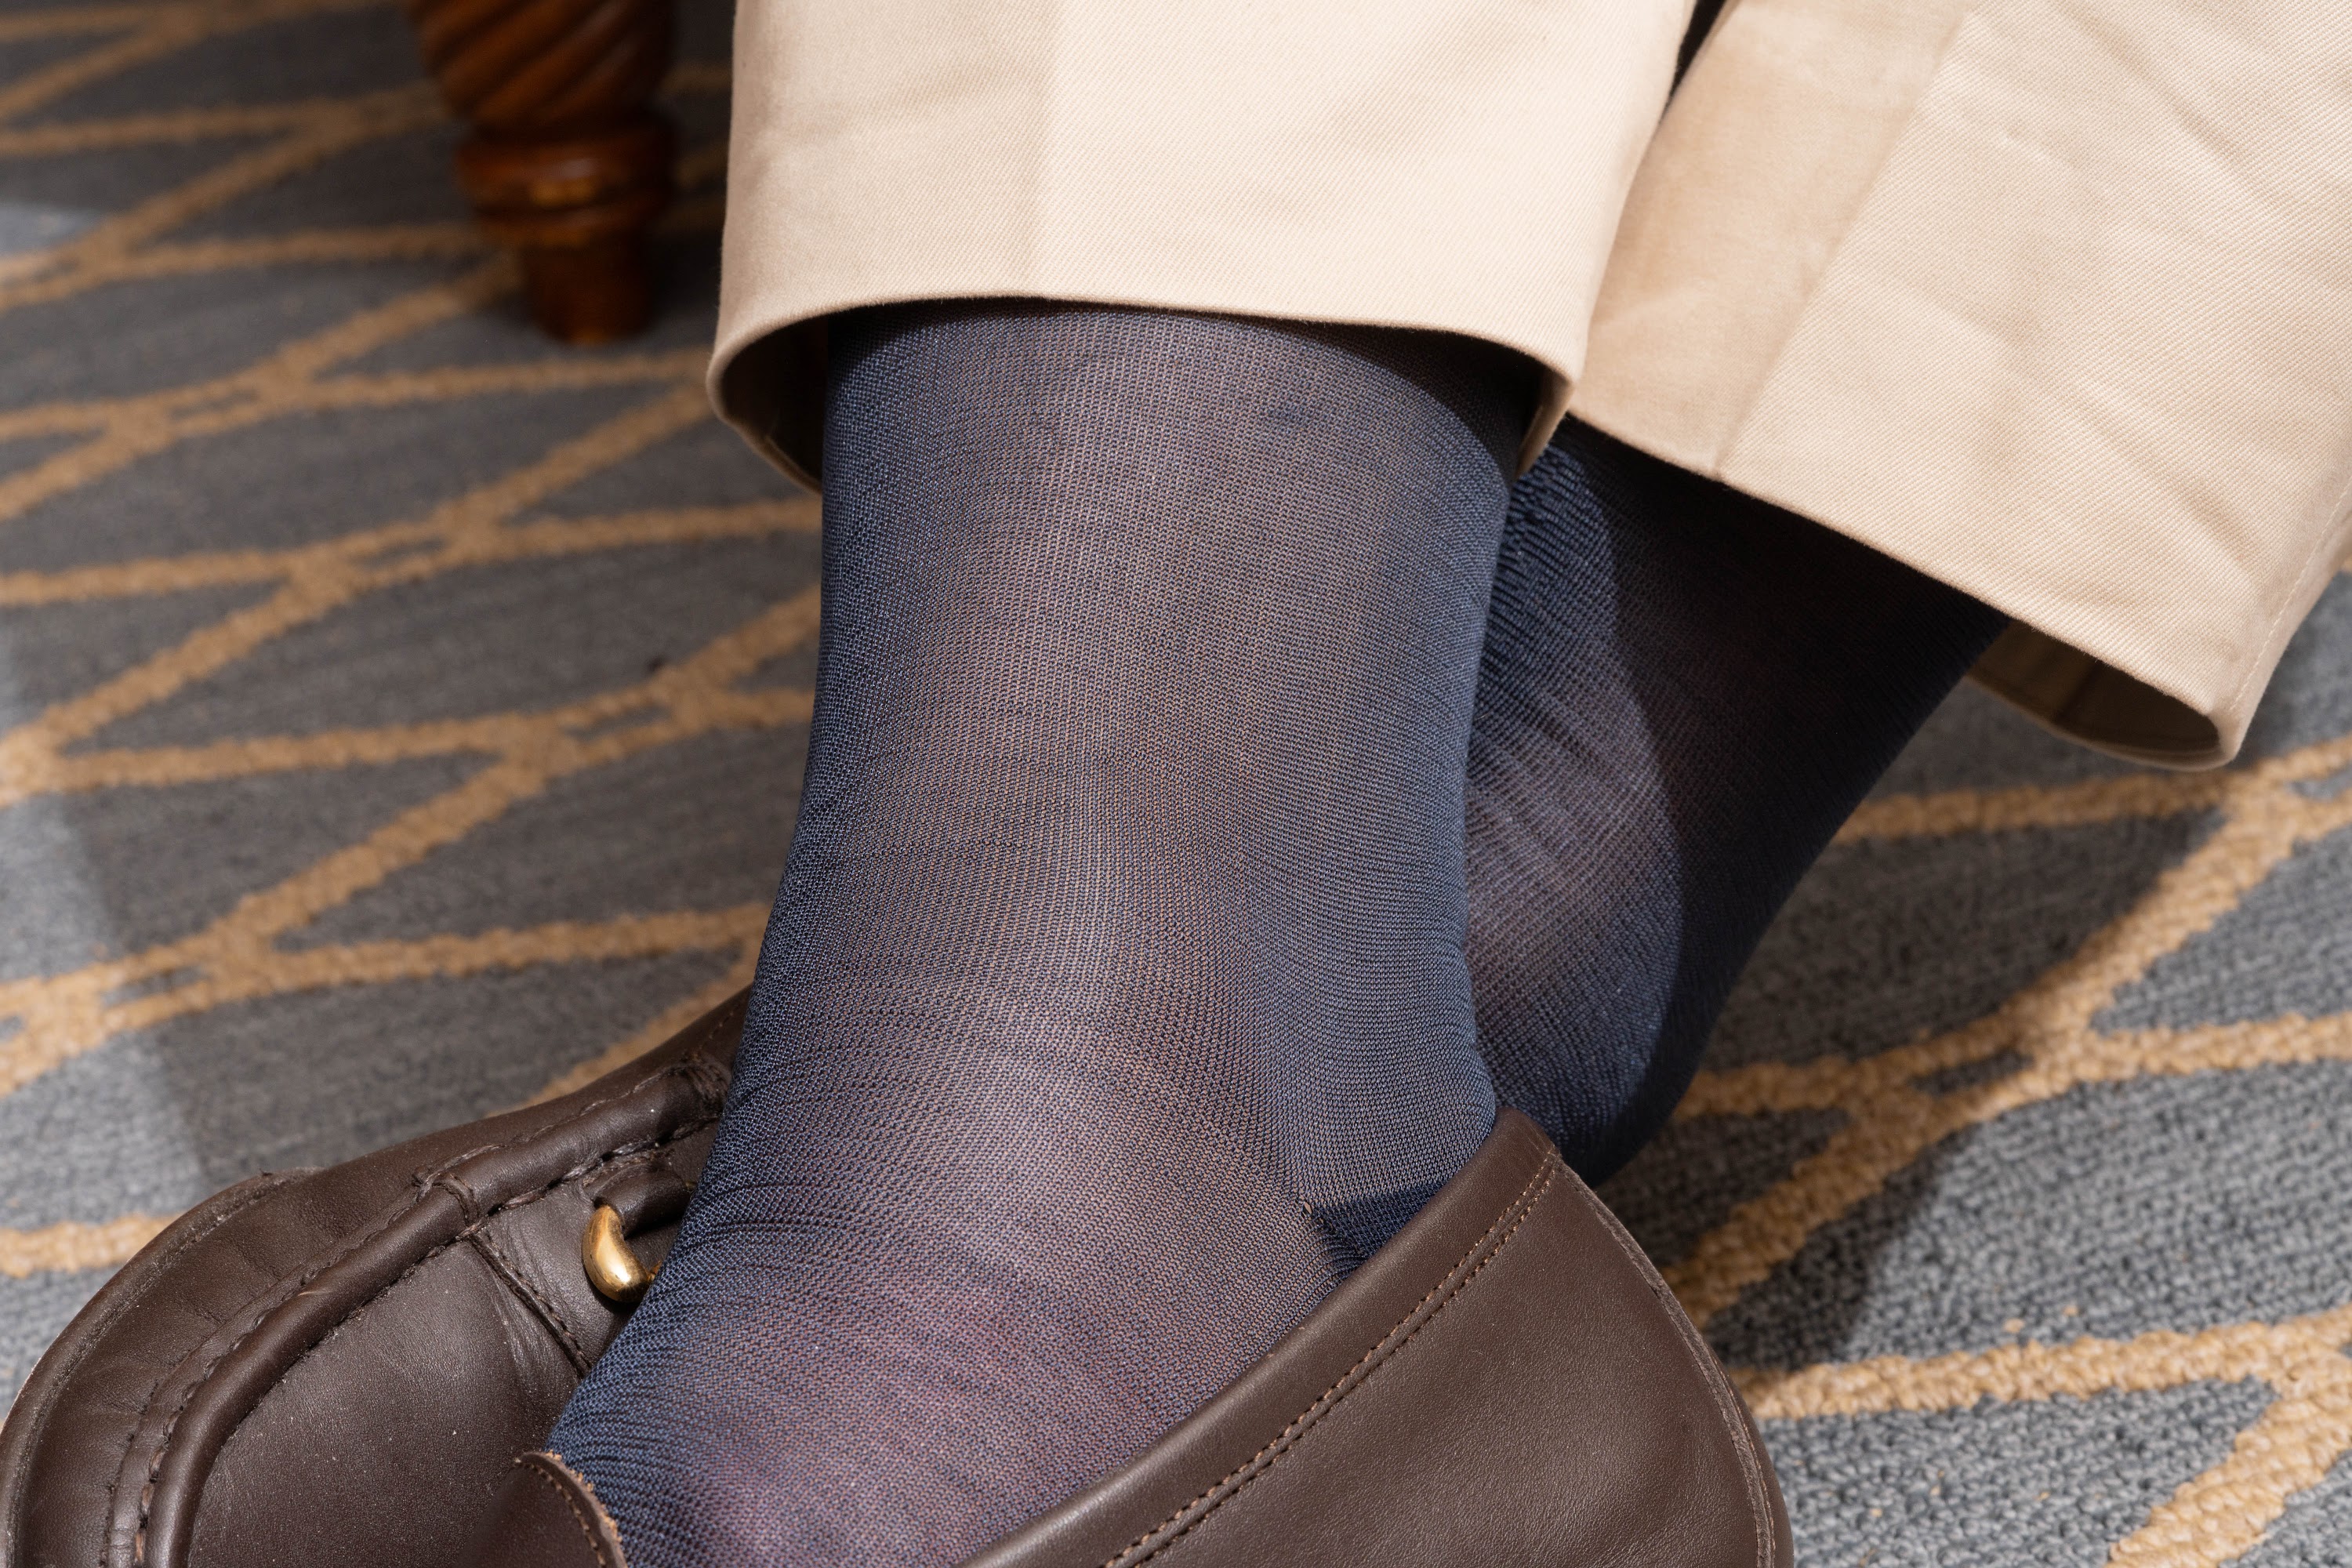 Men's elegant business socks made of pure silk navy-blue